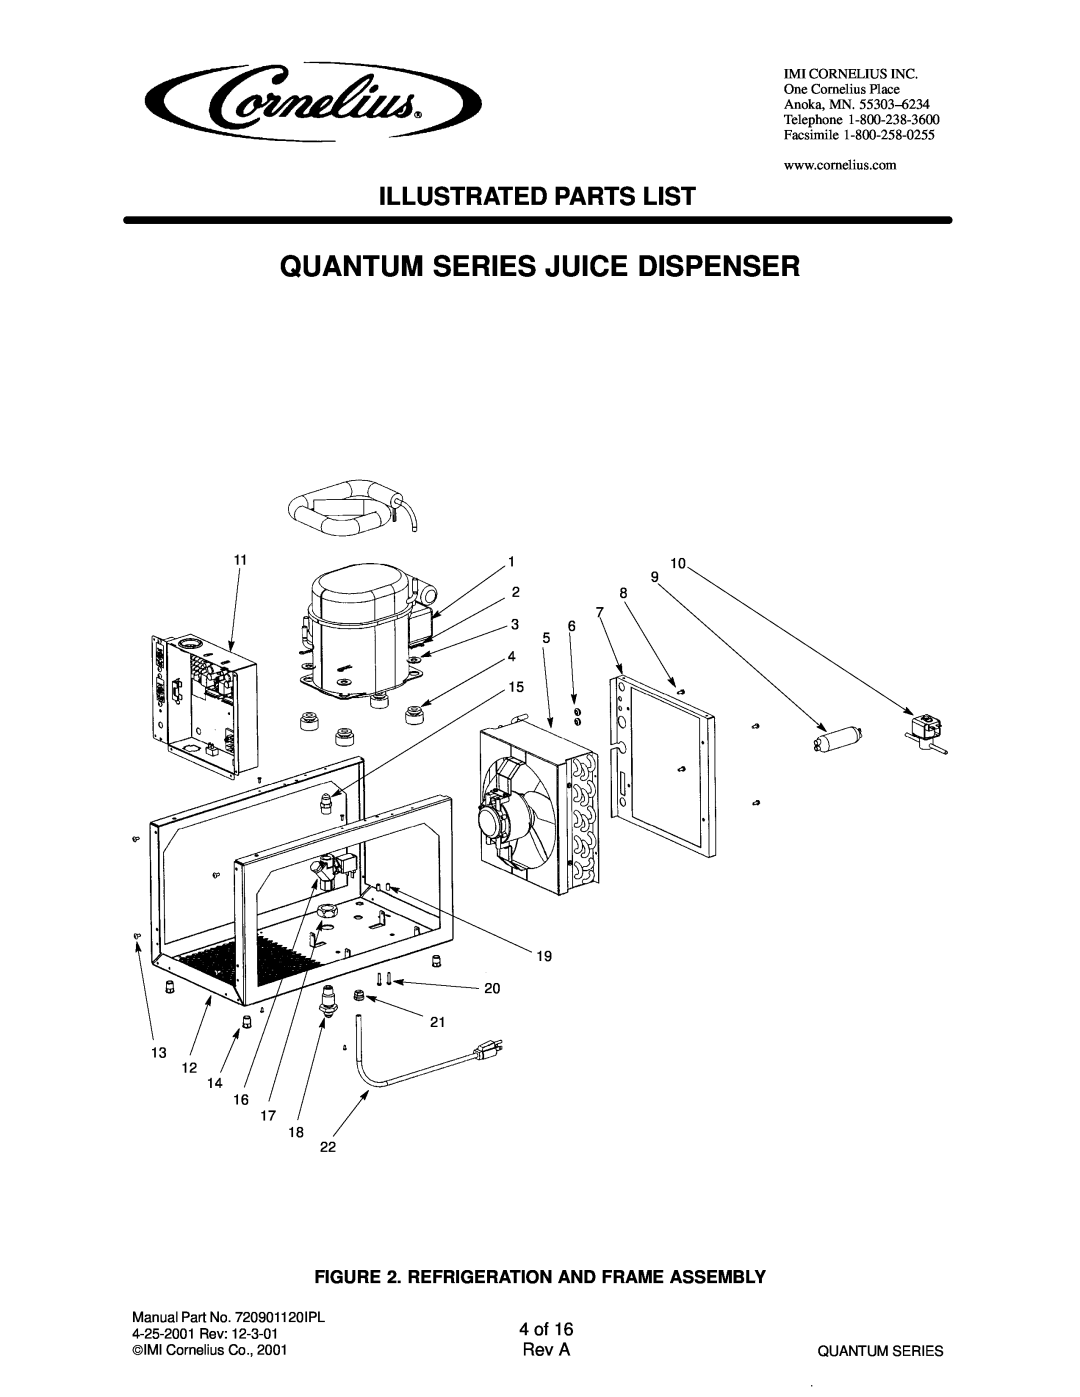 Panasonic 45200002, 45200103, 45200003, 45400002 manual Quantum Series Juice Dispenser, Illustrated Parts List, 4 of, Rev A 